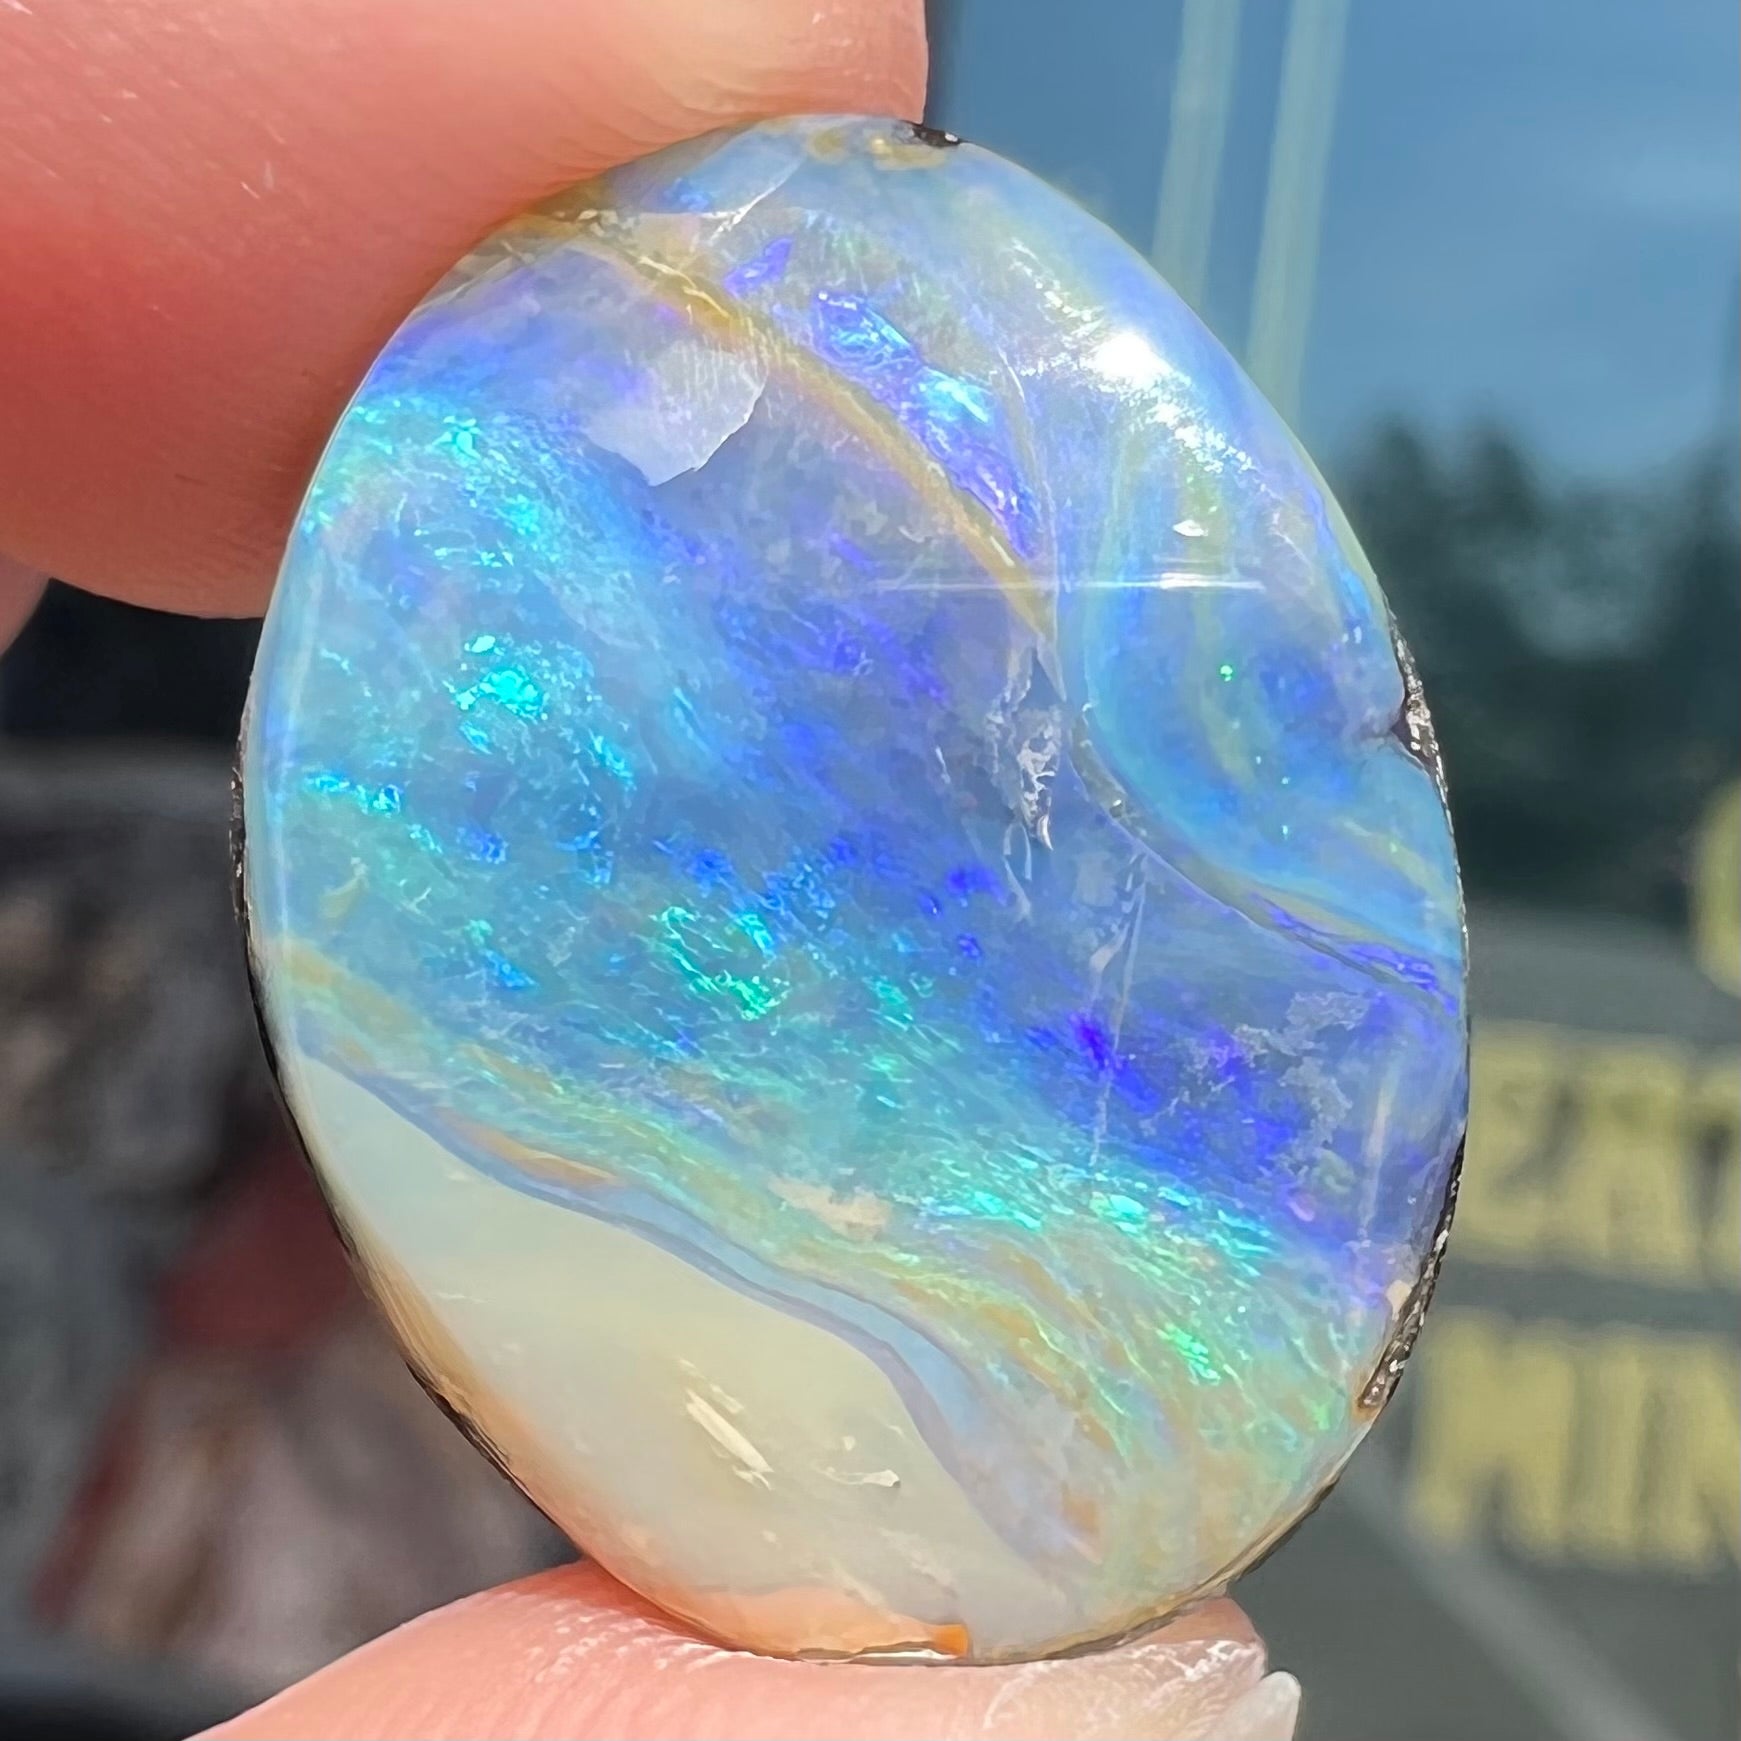 A loose, oval cabochon cut Australian boulder opal stone.